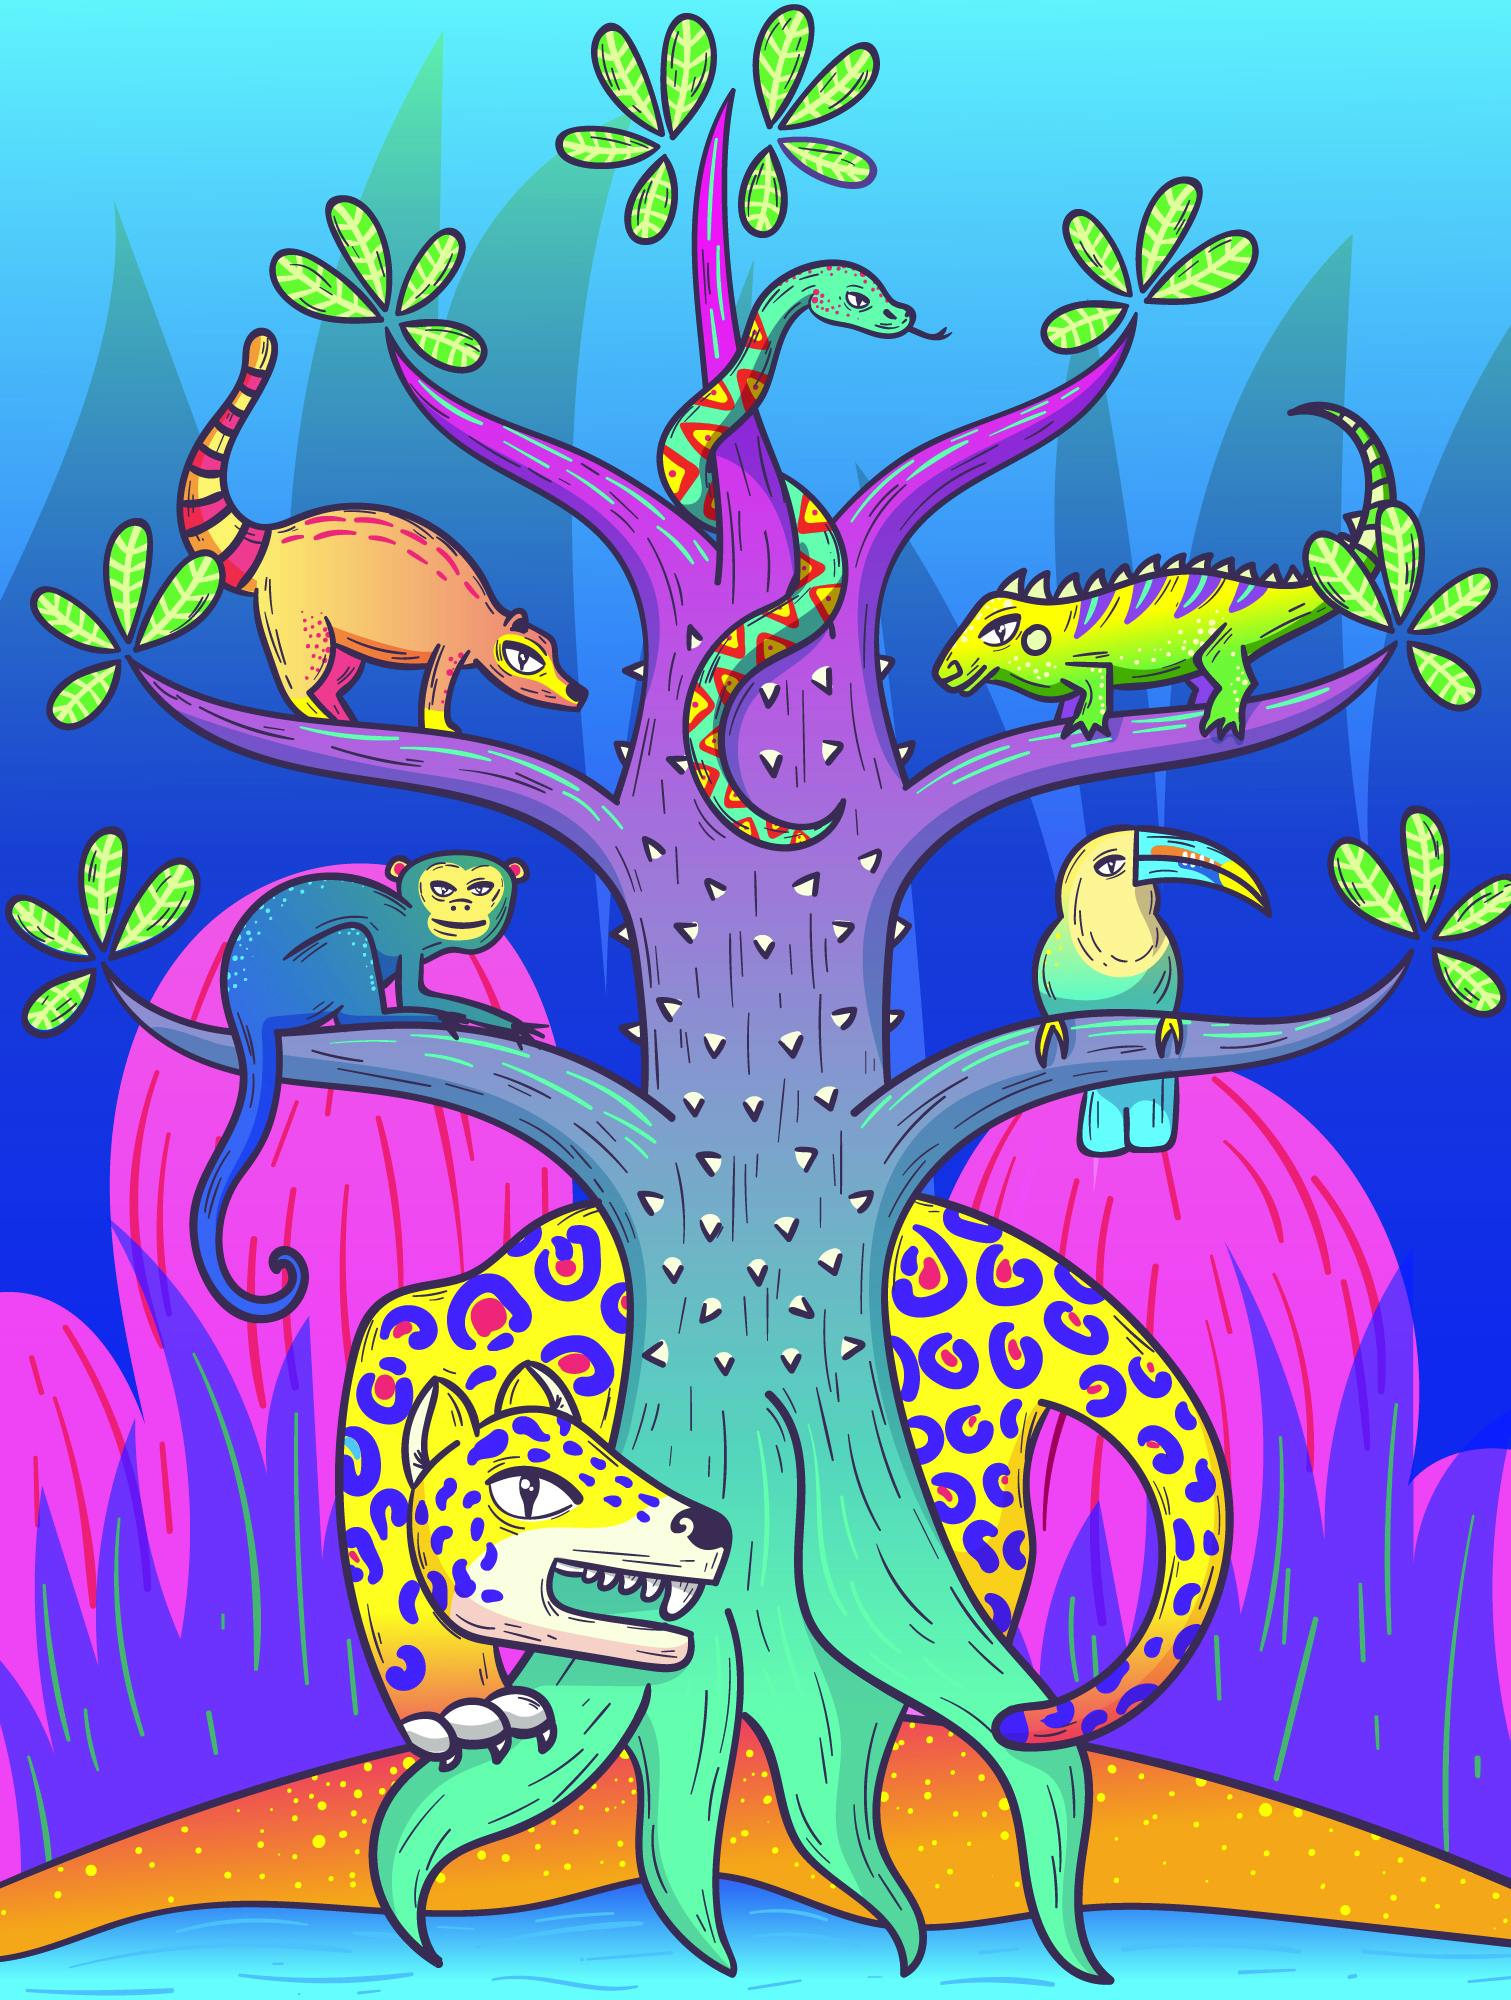 NFT featuring a Ceiba tree from KanNFTStudio led by Danielle Zosavac. Courtesy: KanNFTStudio.